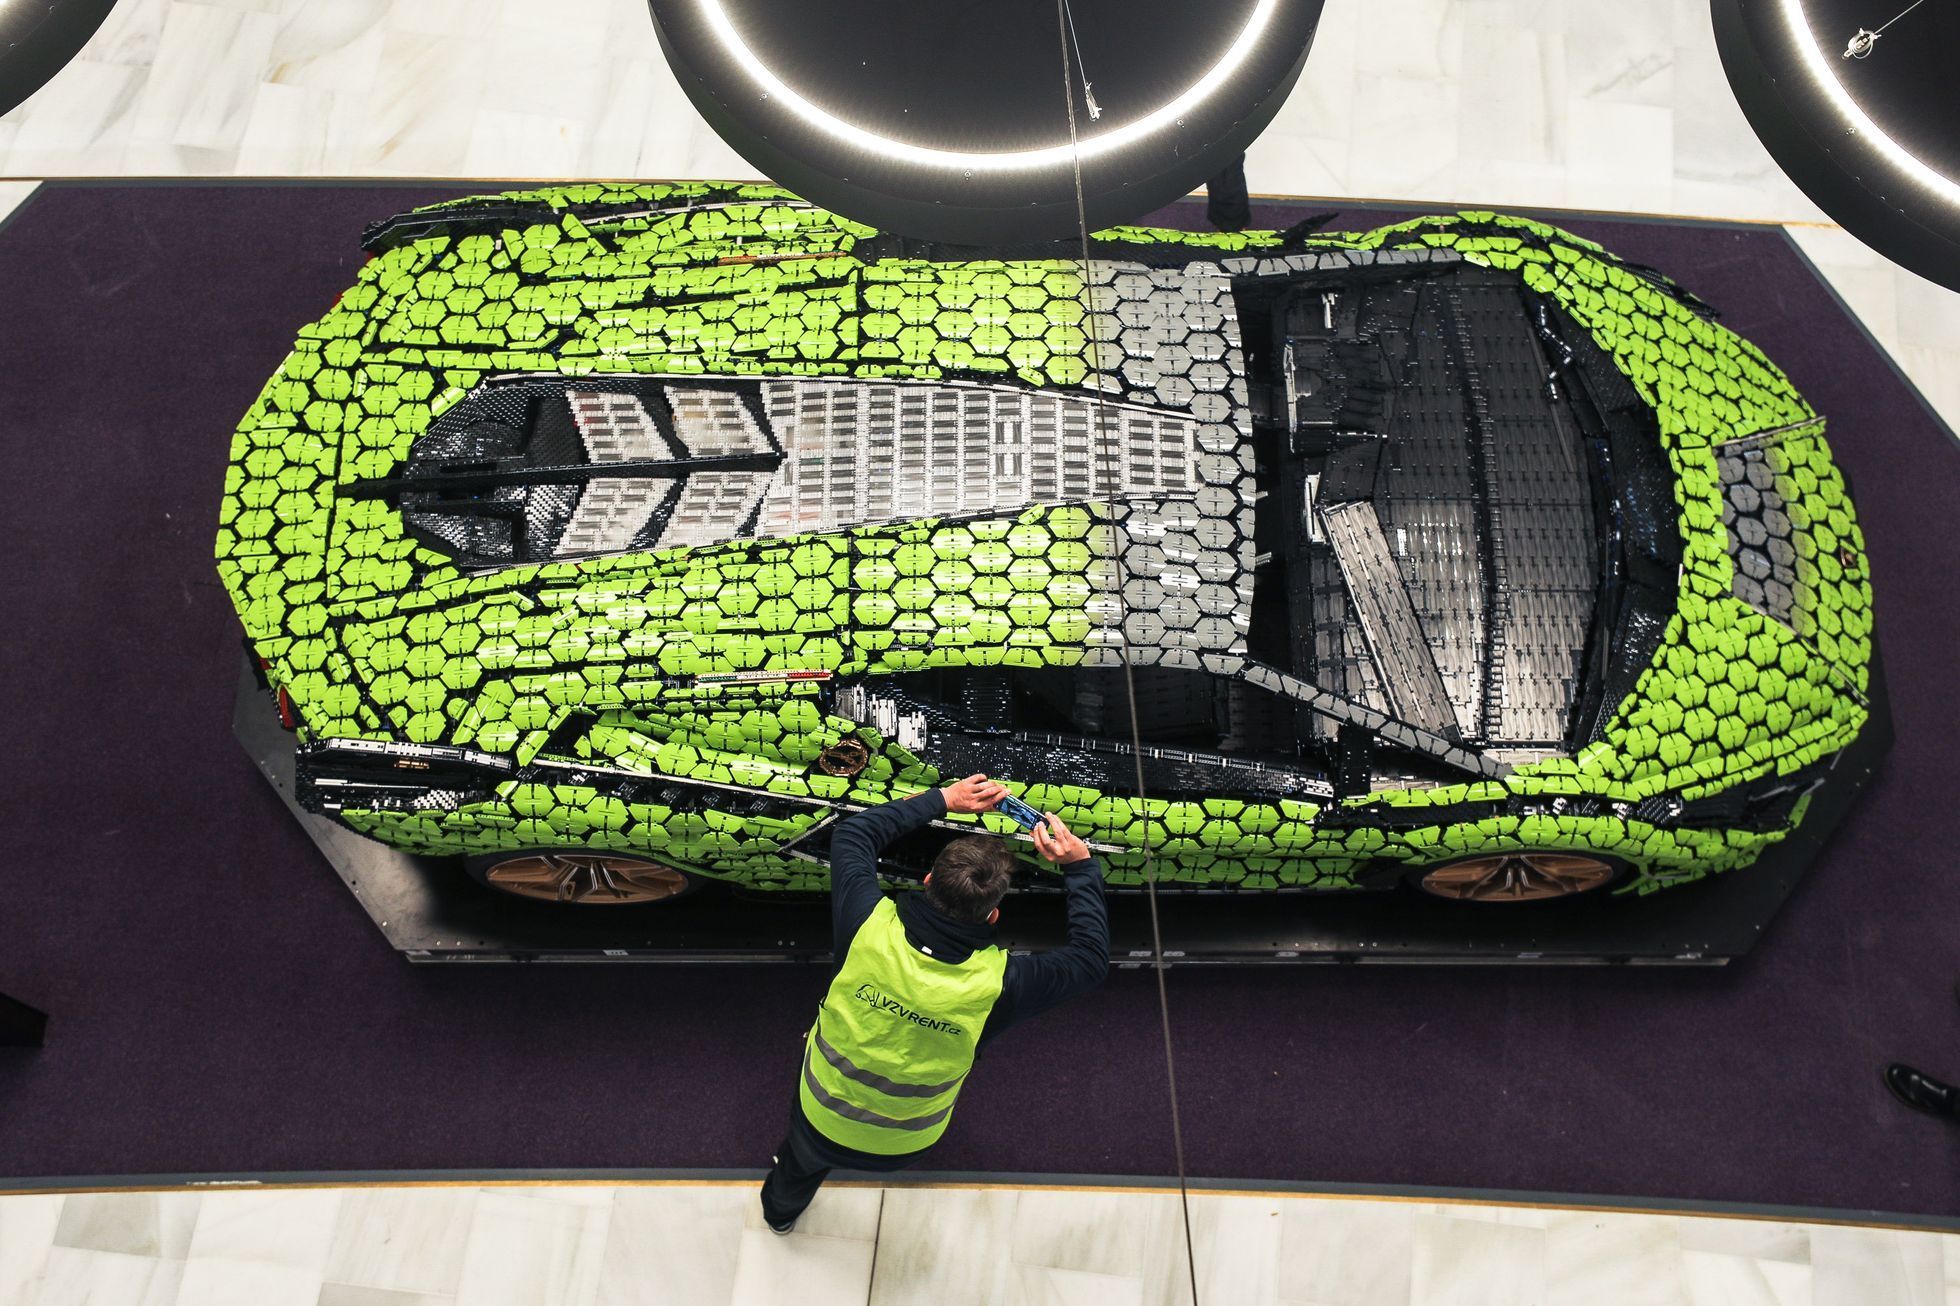 Lamborghini Sian z Lega v Obchodním centru Chodov